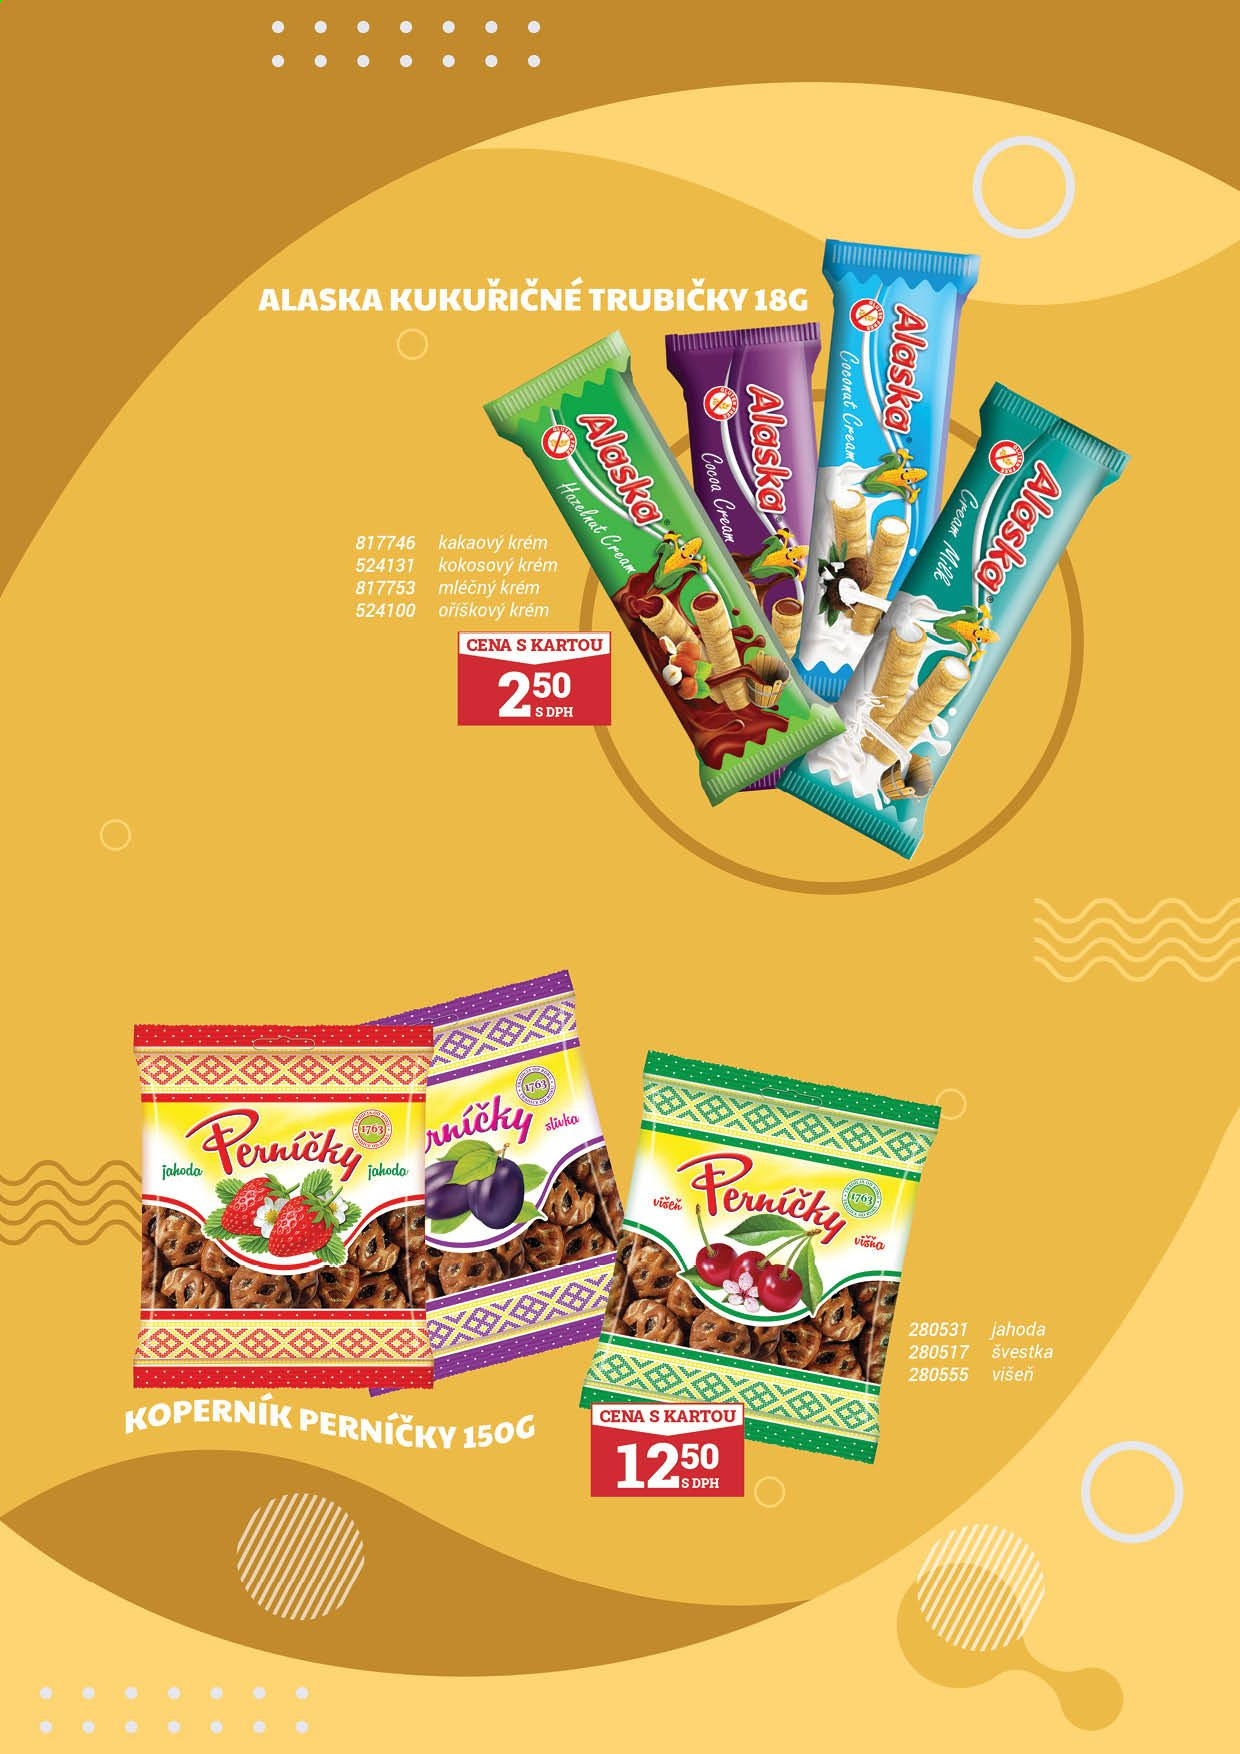 Leták Tamda Foods - 30. 6. 2021 - 6. 7. 2021. 